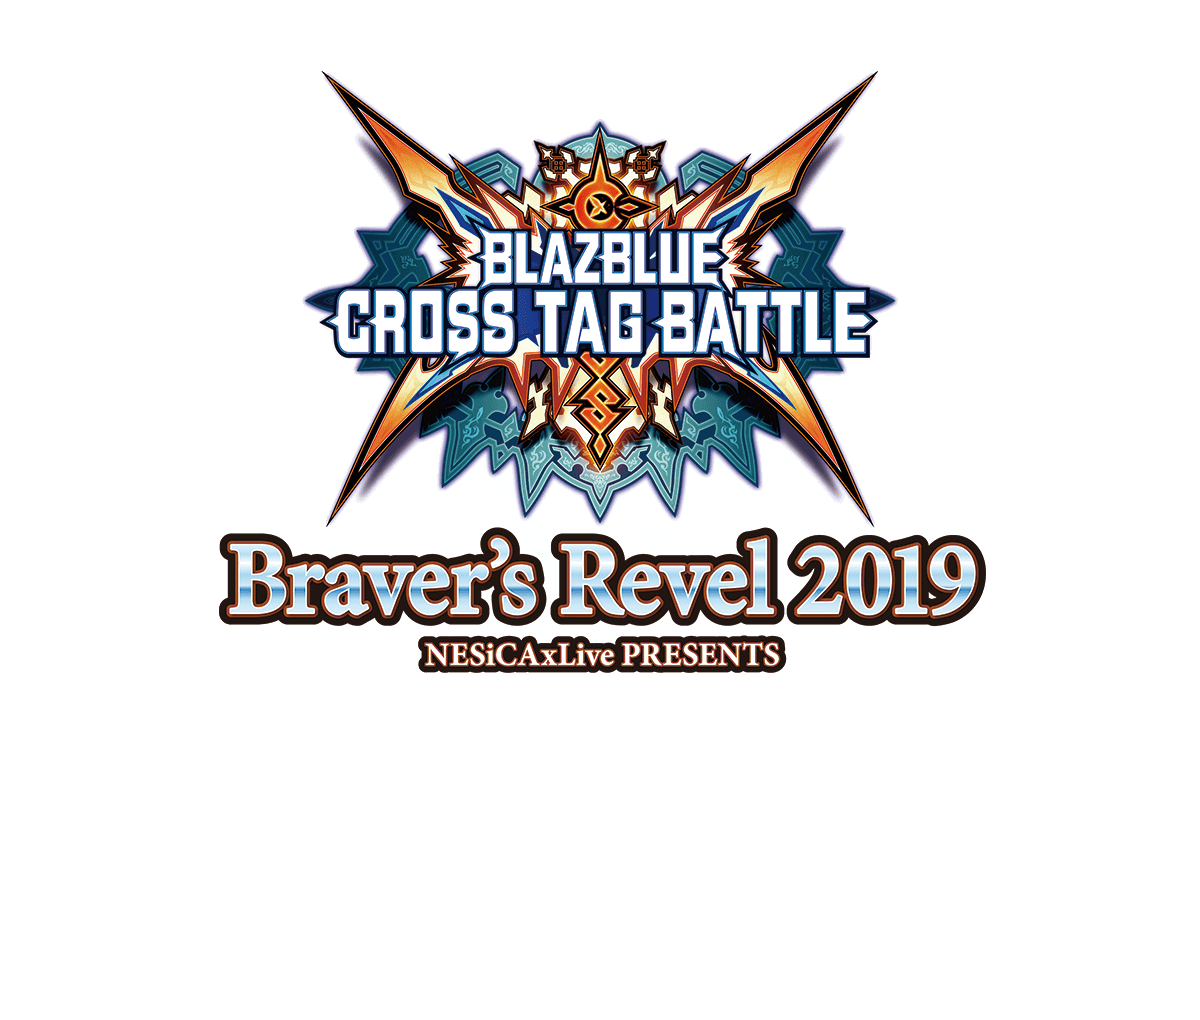 BLAZBLUE CROSS TAG BATTLE Braver's Revel 2019 NESiCAxLive presents